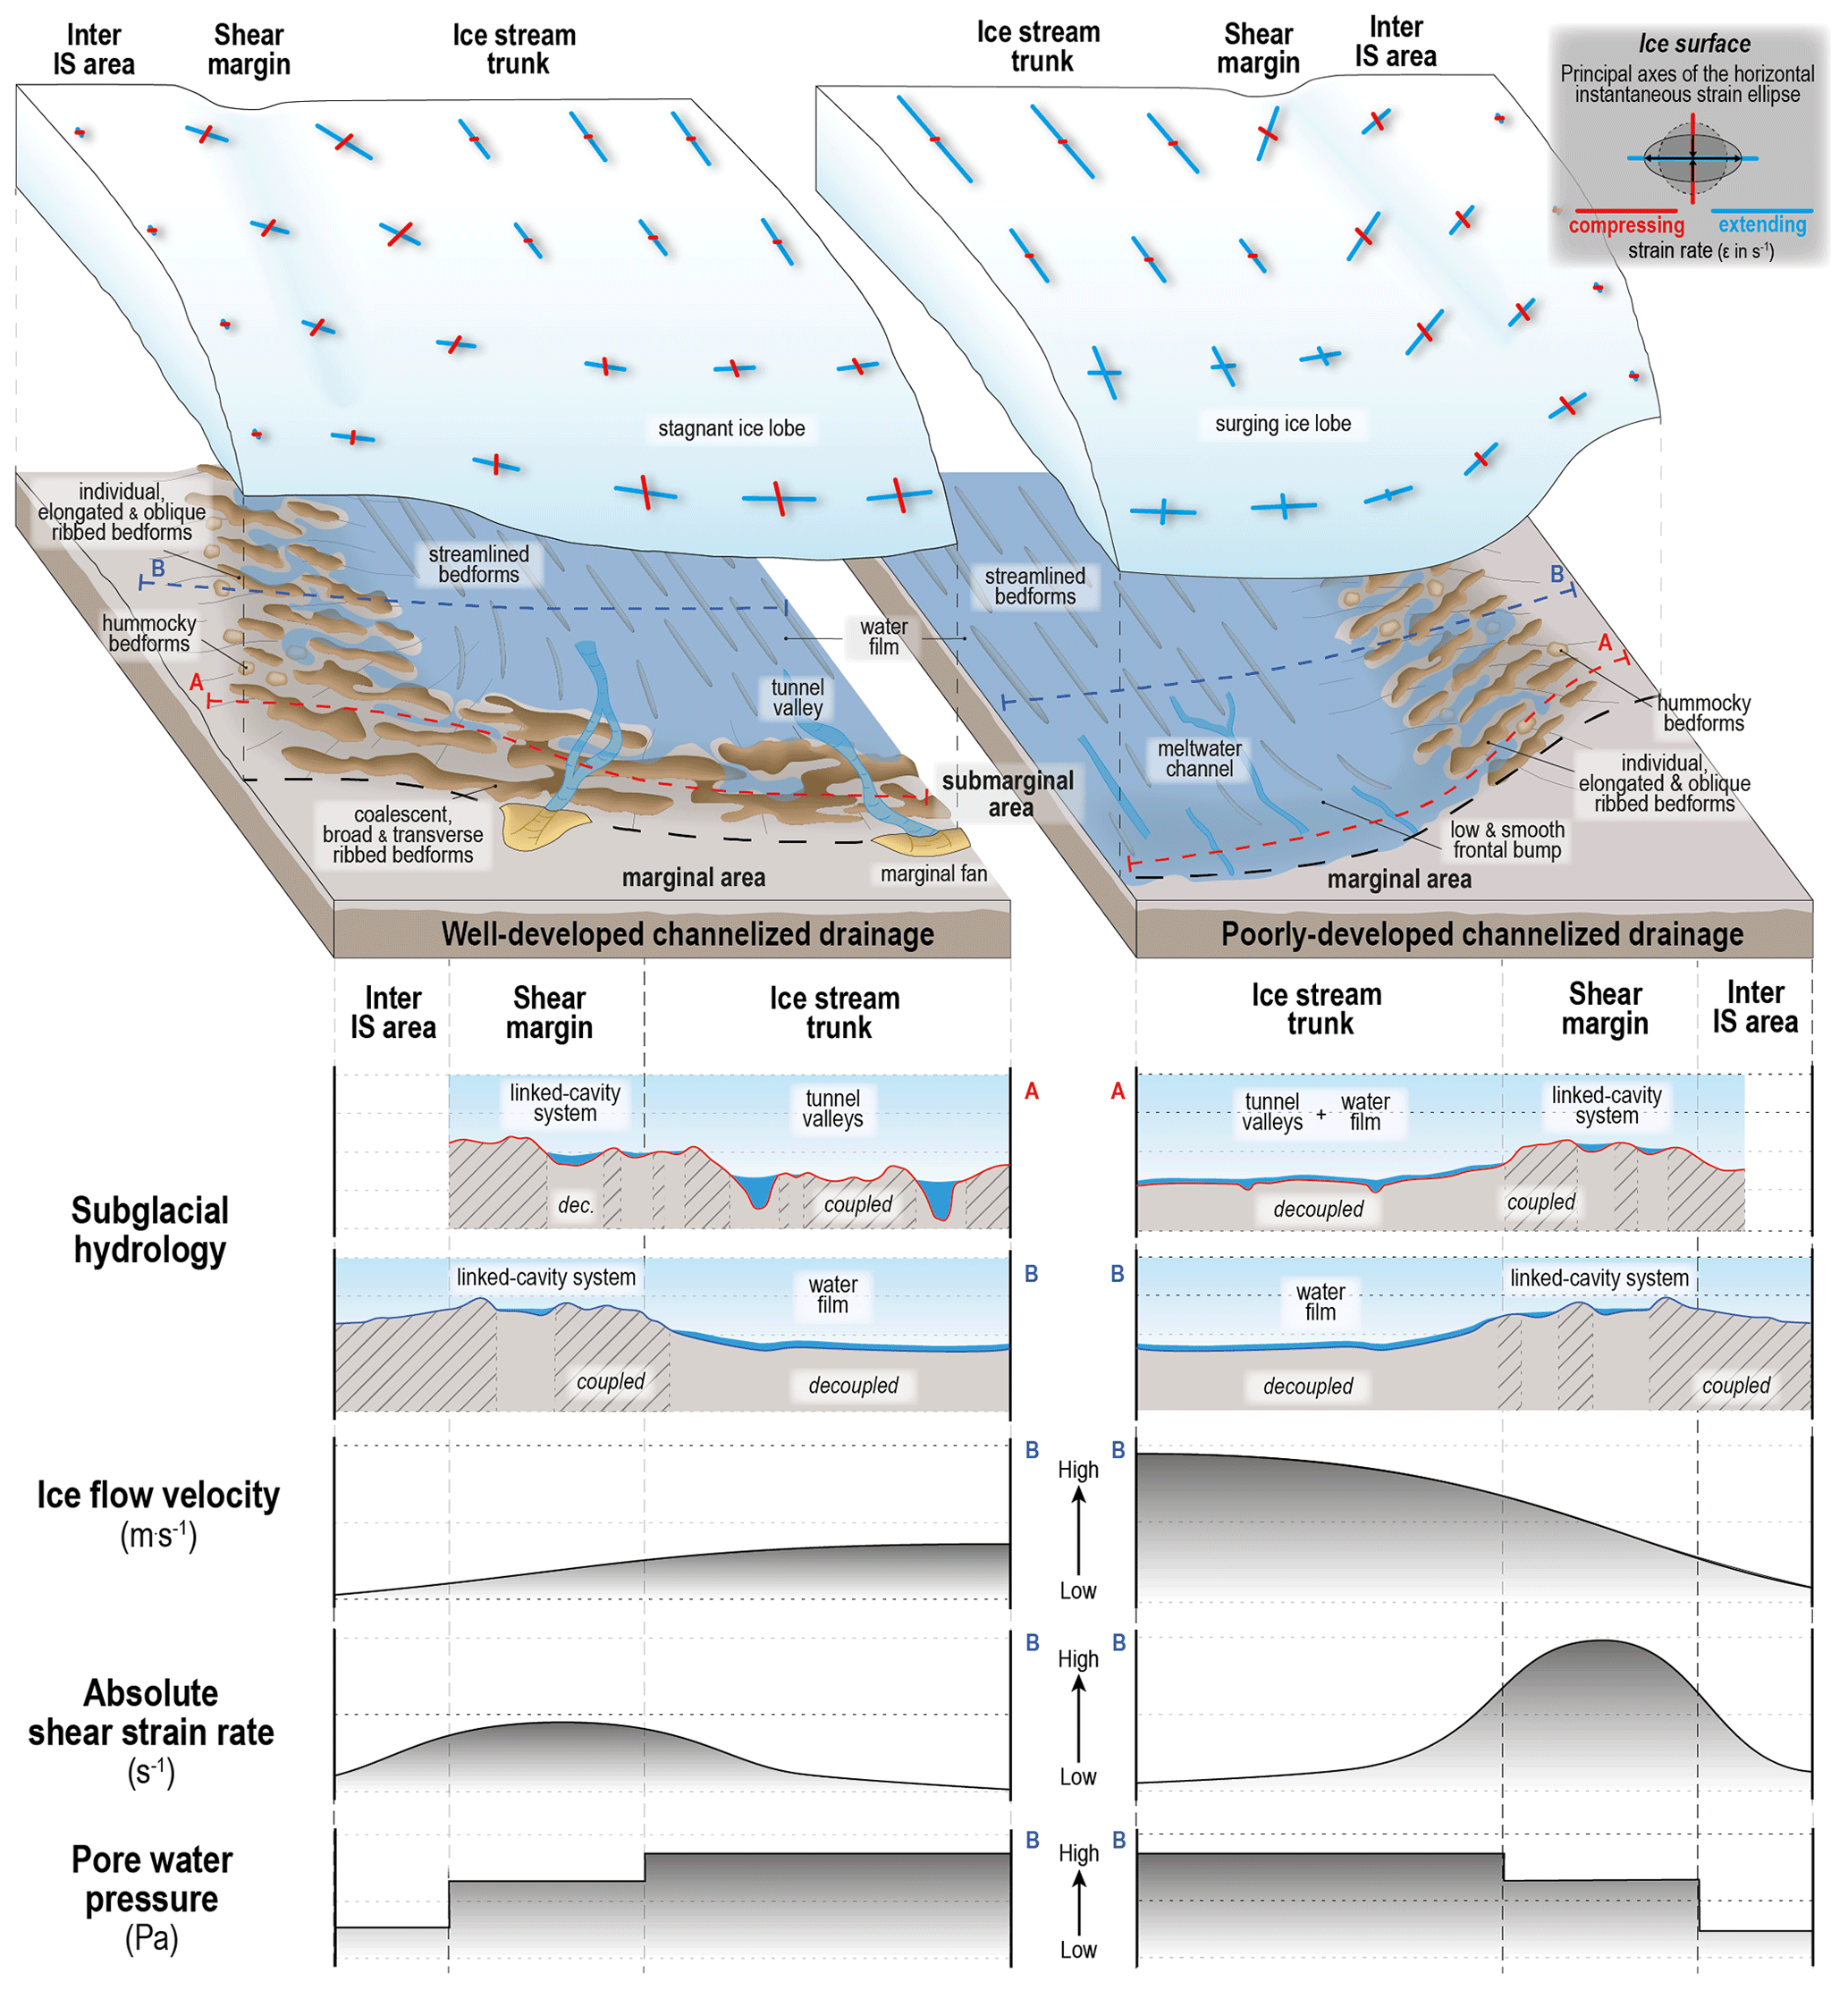 Palaeo-ice stream landsystem 